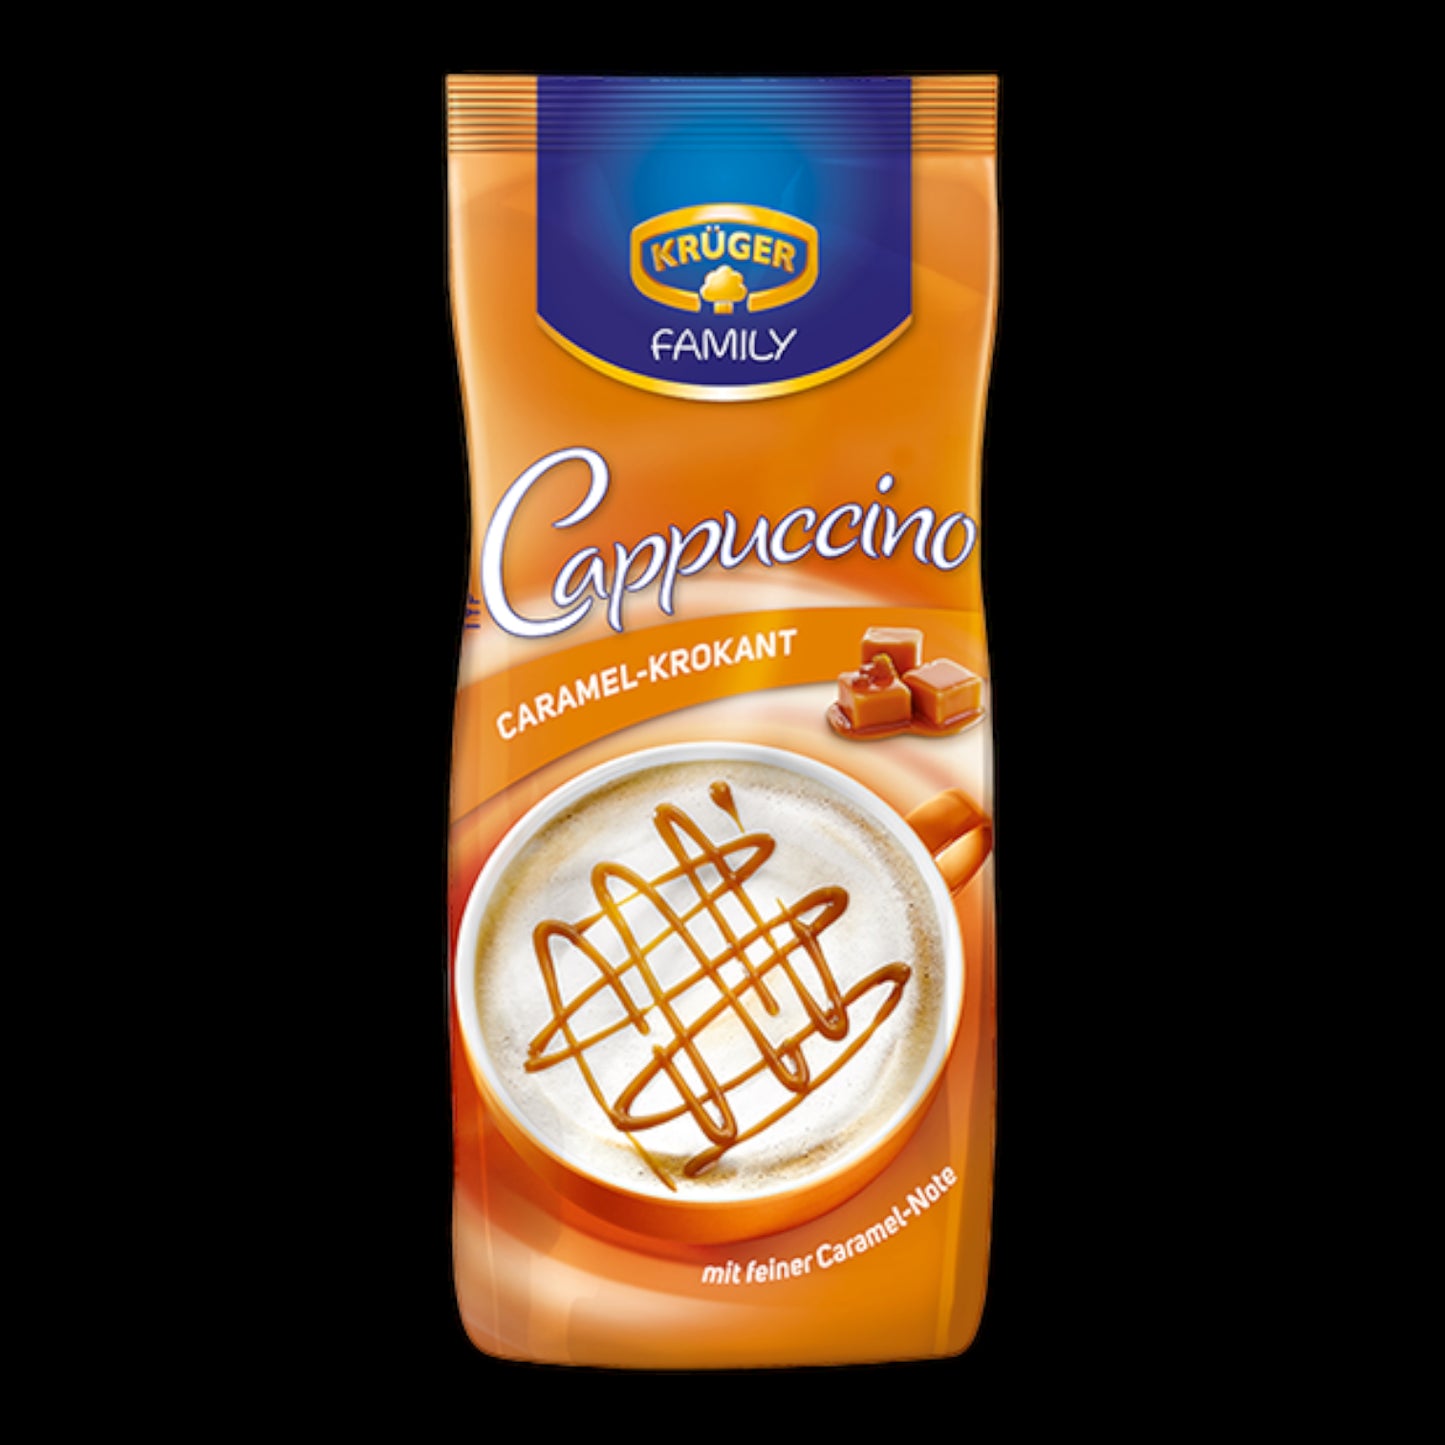 Krüger Cappuccino Caramel-Krokant 500g